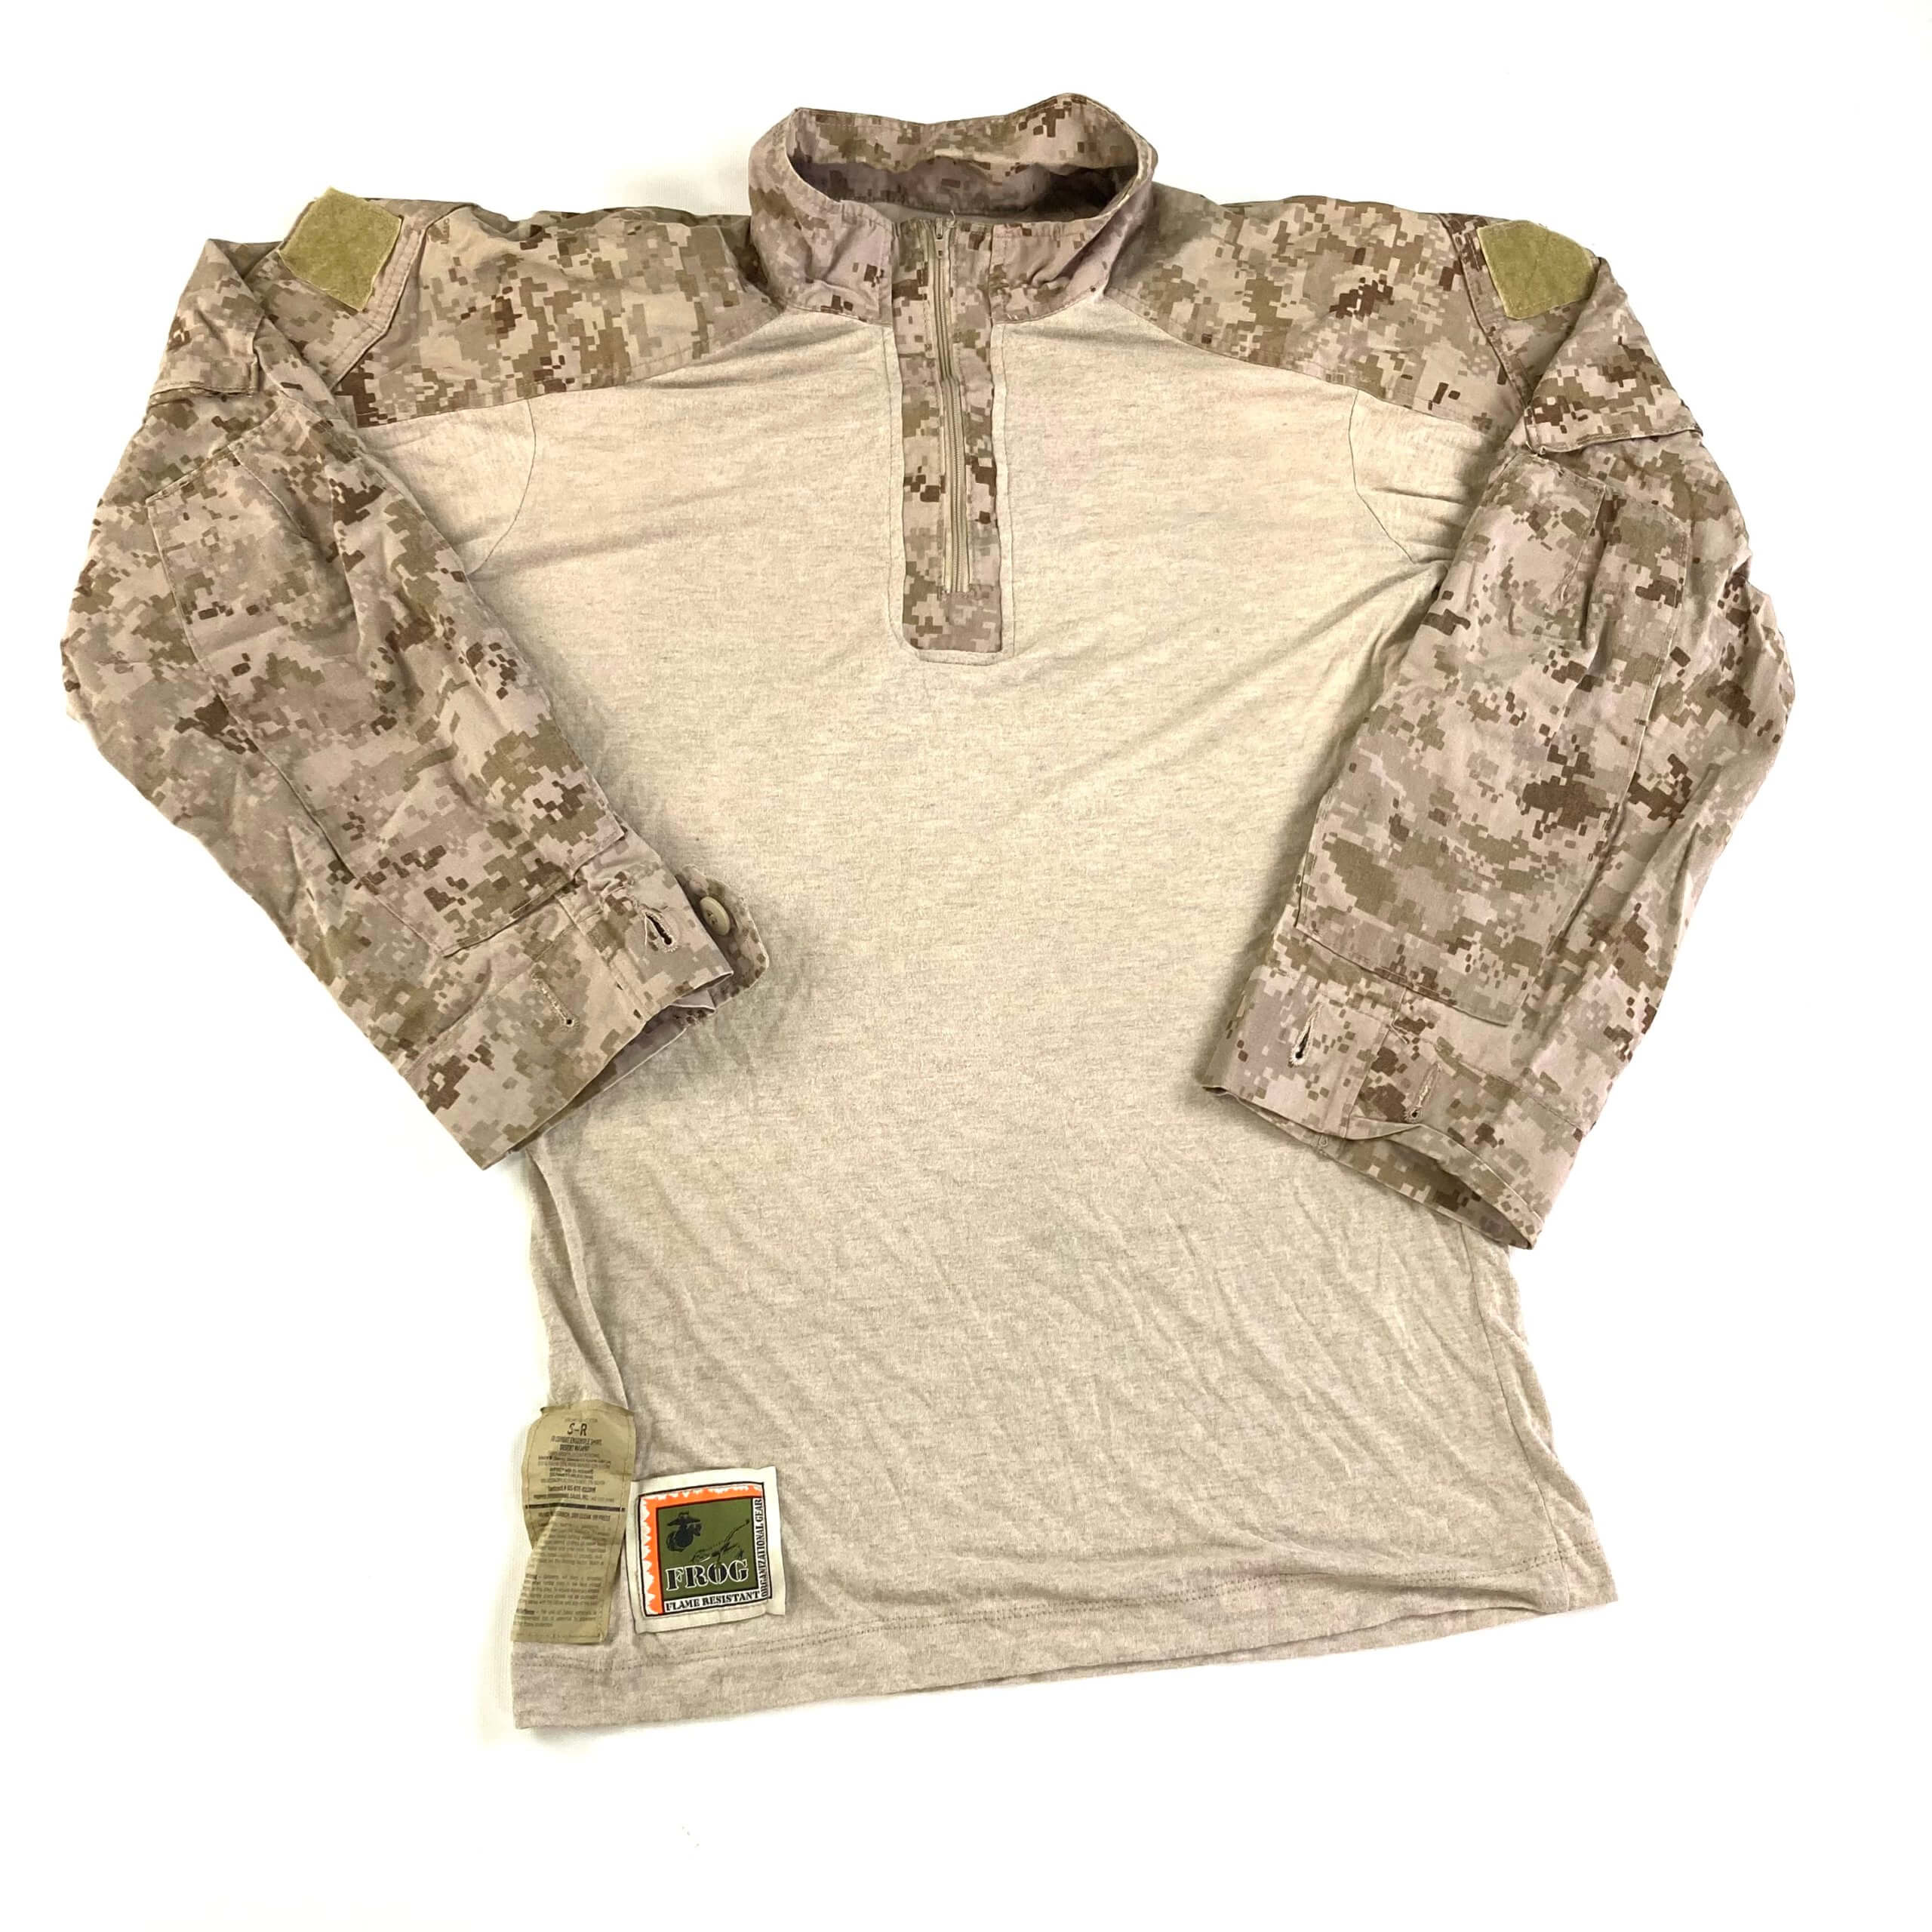 AUTHENTIC NEW USMC Desert Frog Shirt SMALL REGULAR  MARPAT COMBAT Blouse